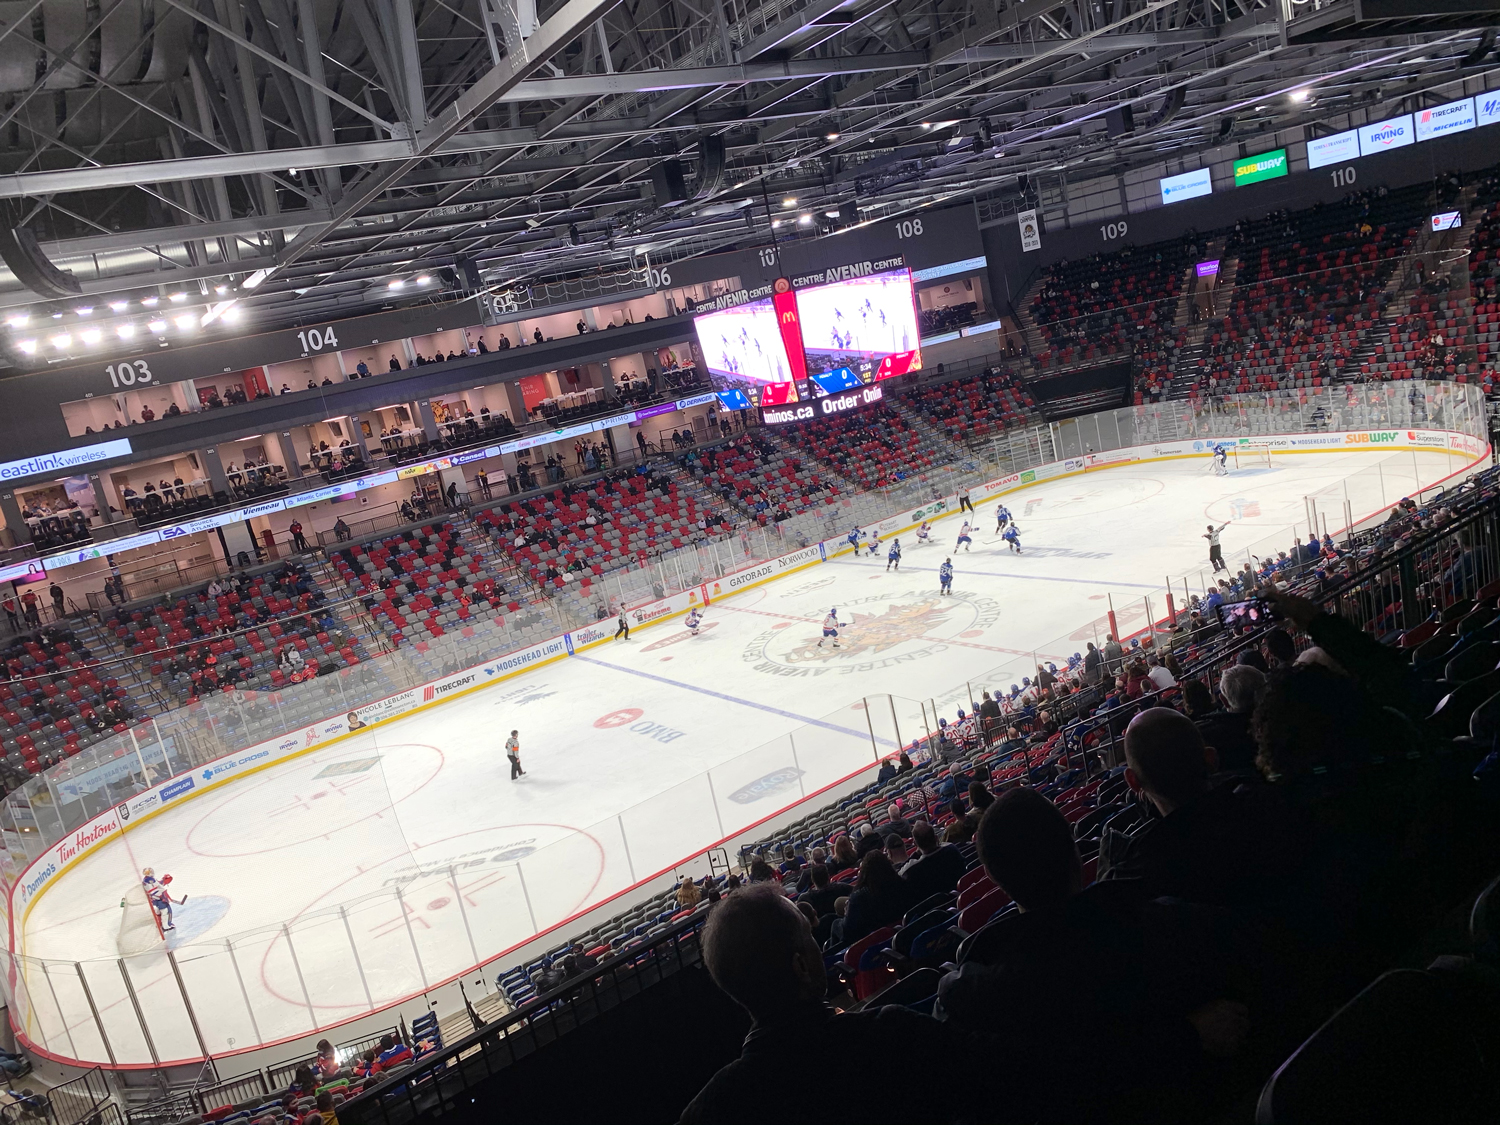 Brandon Wheat Kings Hockey Club (WHL) - Hey BWK fans, want to get